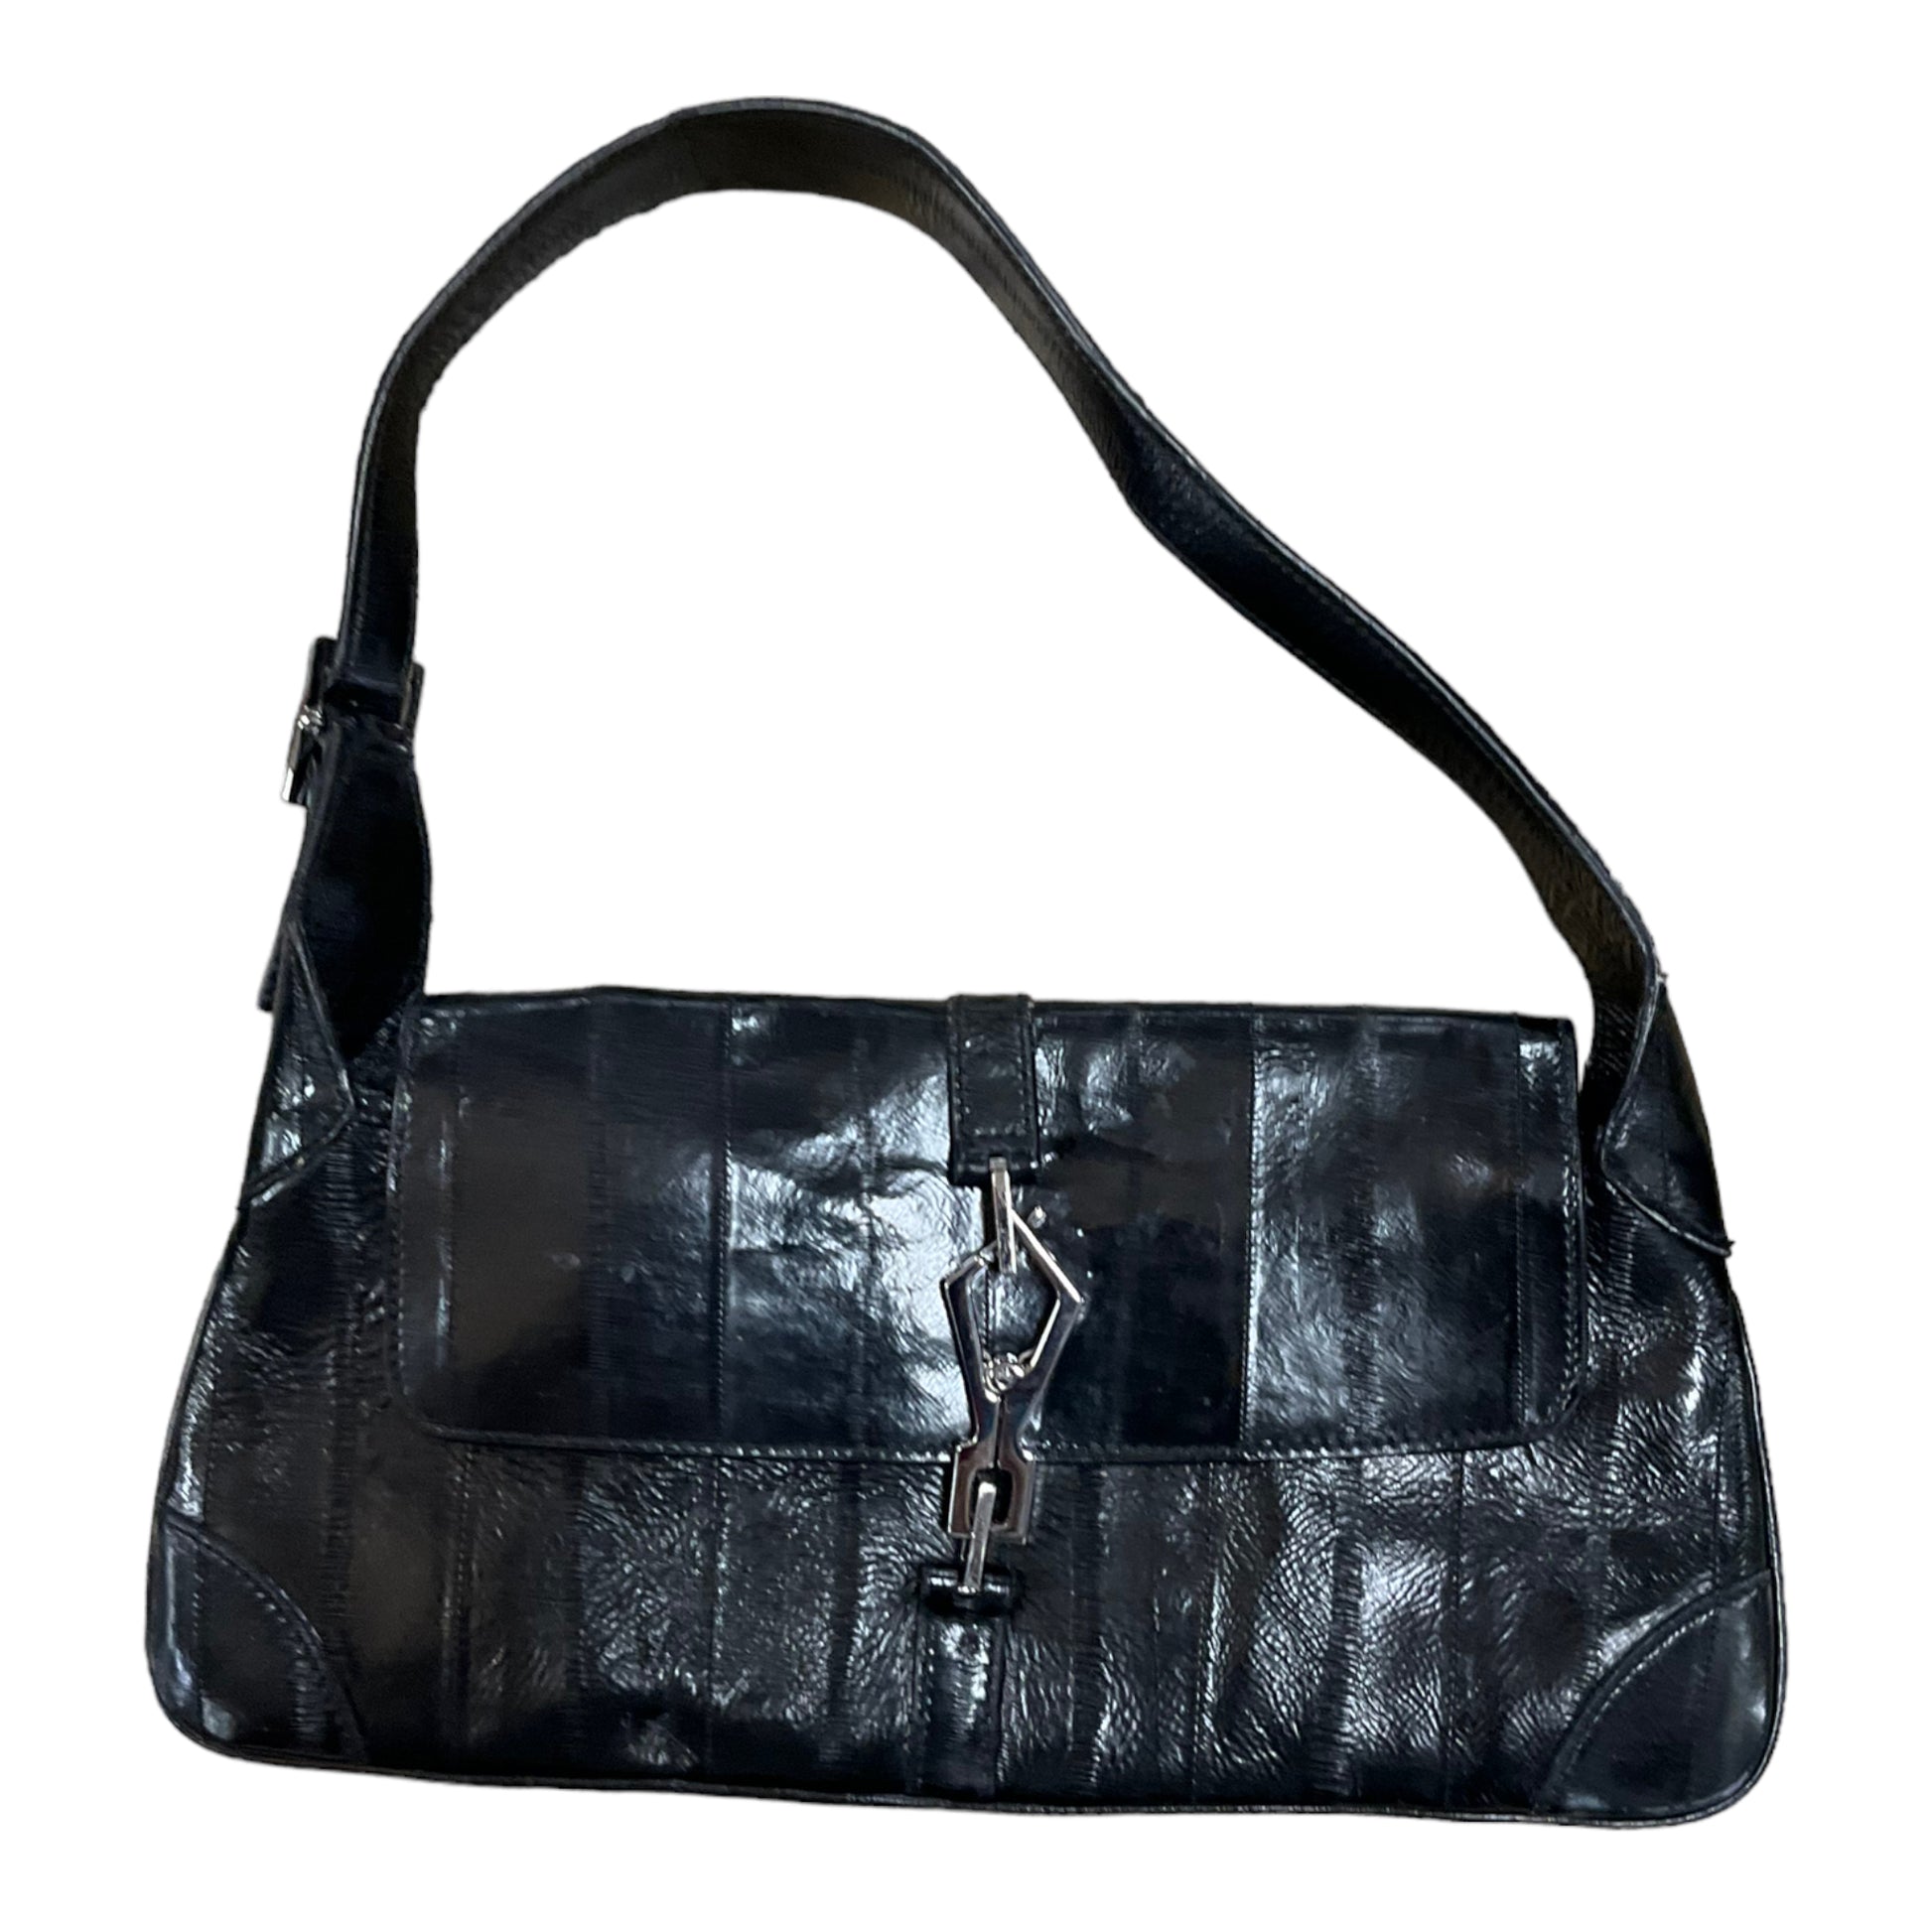 Handbag Designer By Gucci Size: Small